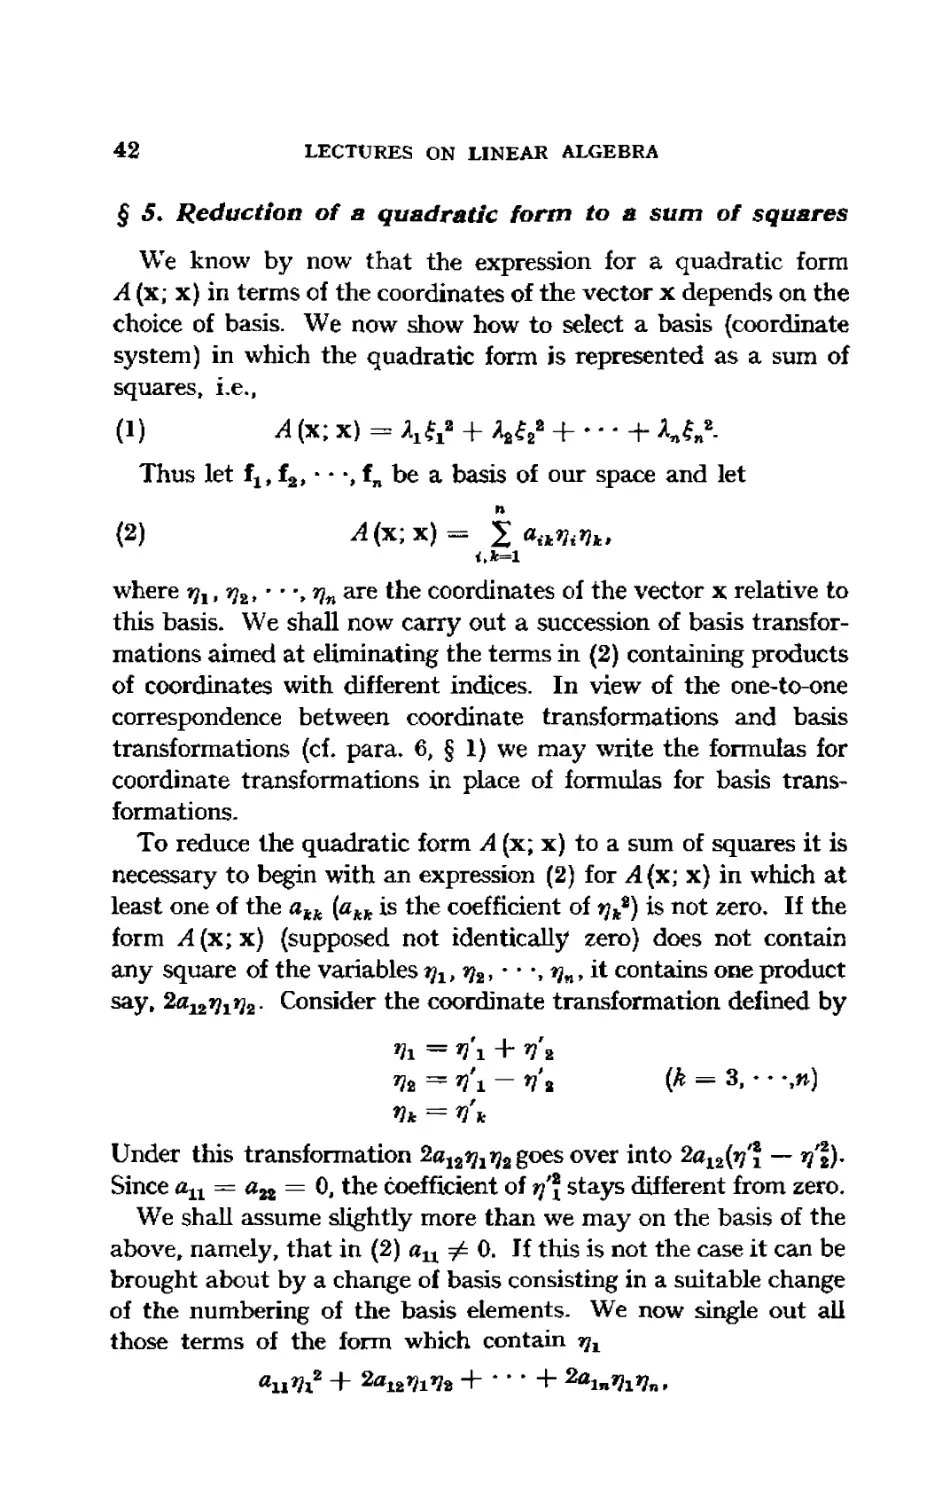 §5. Reduction of a quadratic form to a sum of squares